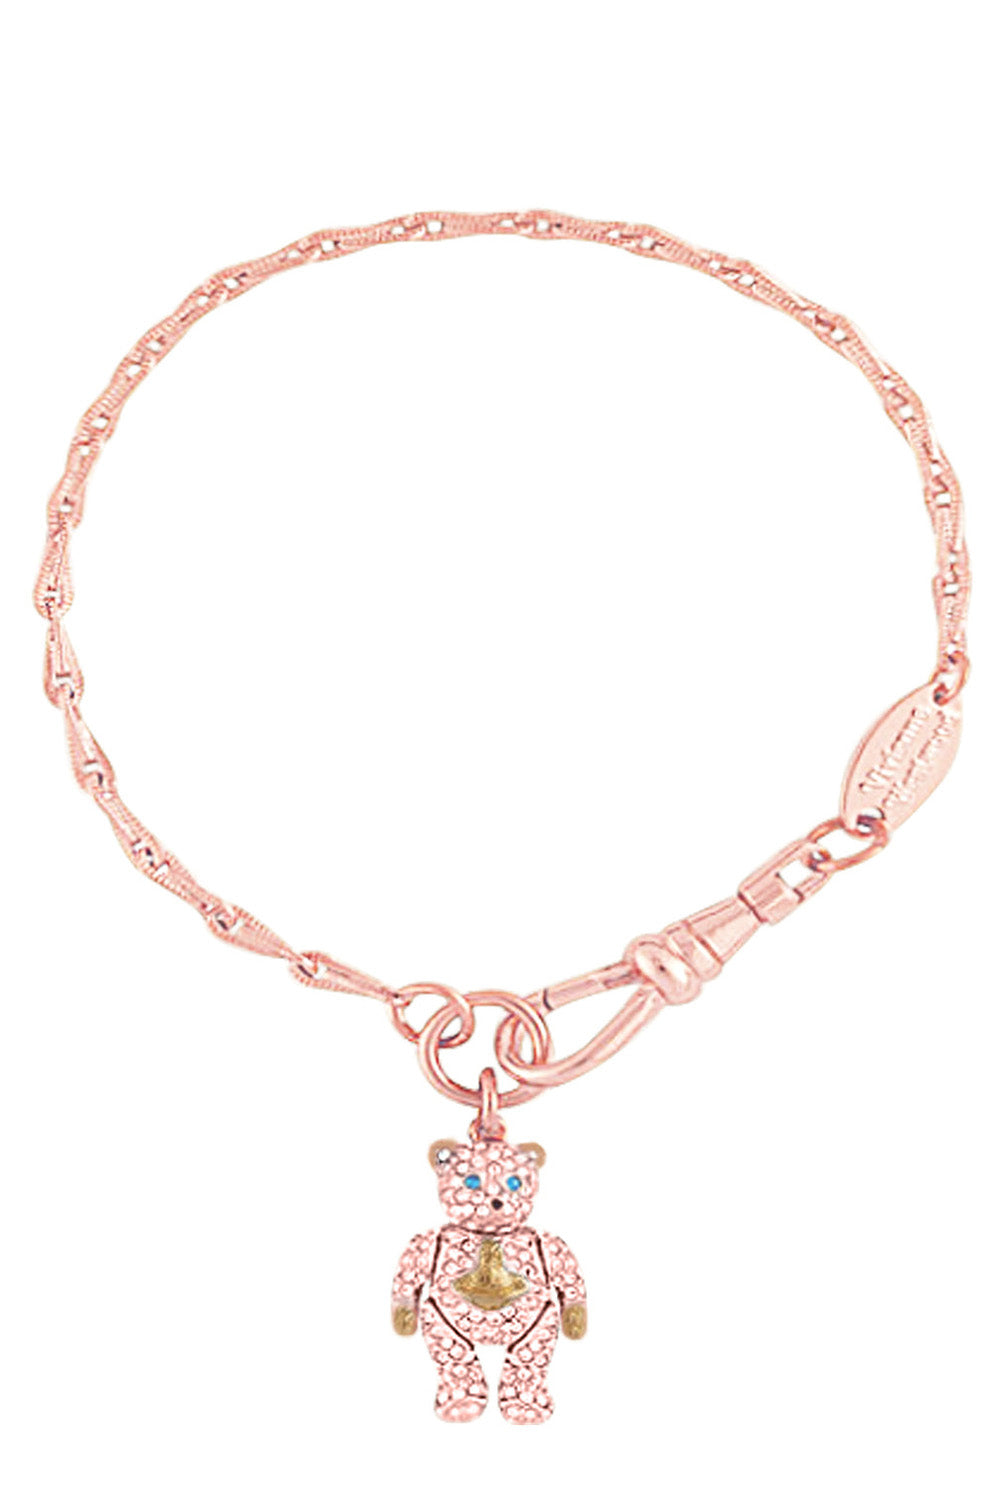 Vivienne Monogram Pendant, Pink Gold, Mother-Of-Pearl, Wood